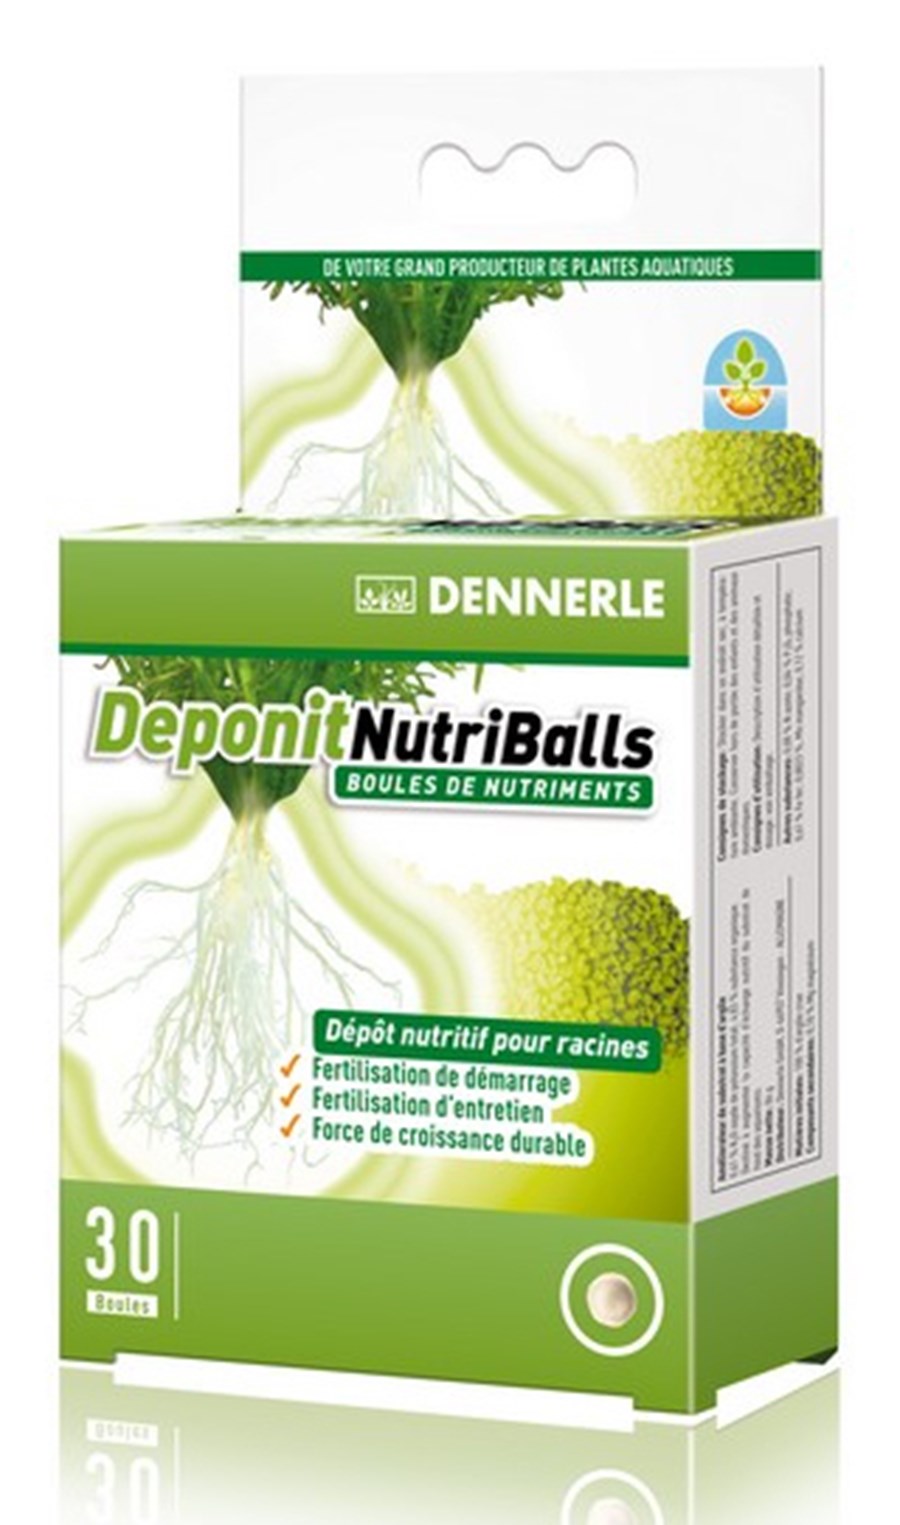 Deponit NutriBalls 30 boules